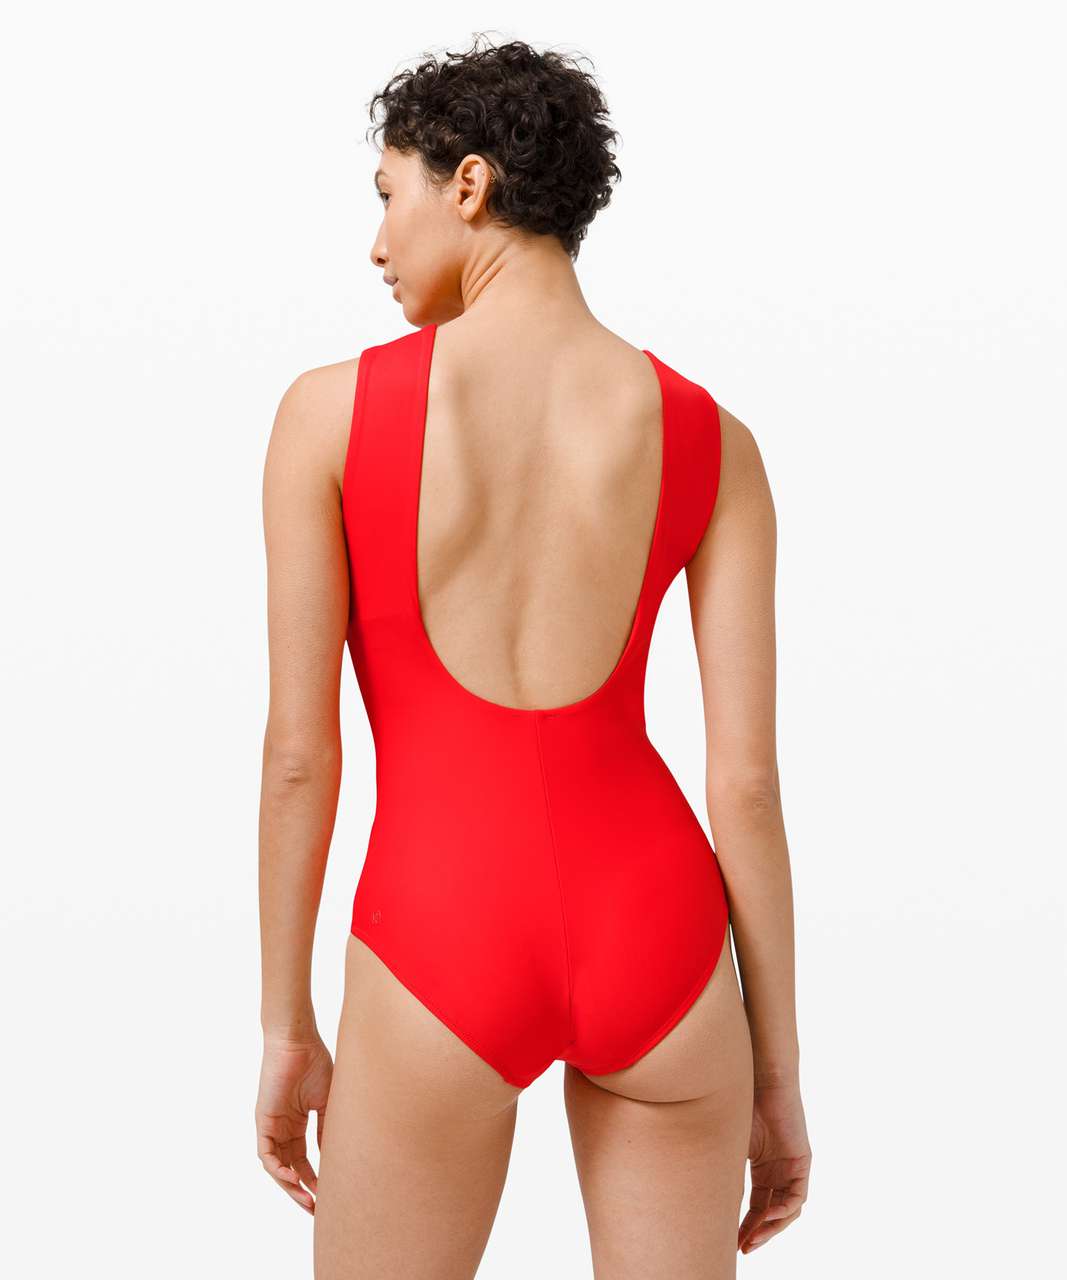 Lululemon - Waterside High-Neck One-Piece Swimsuit *Medium Bum